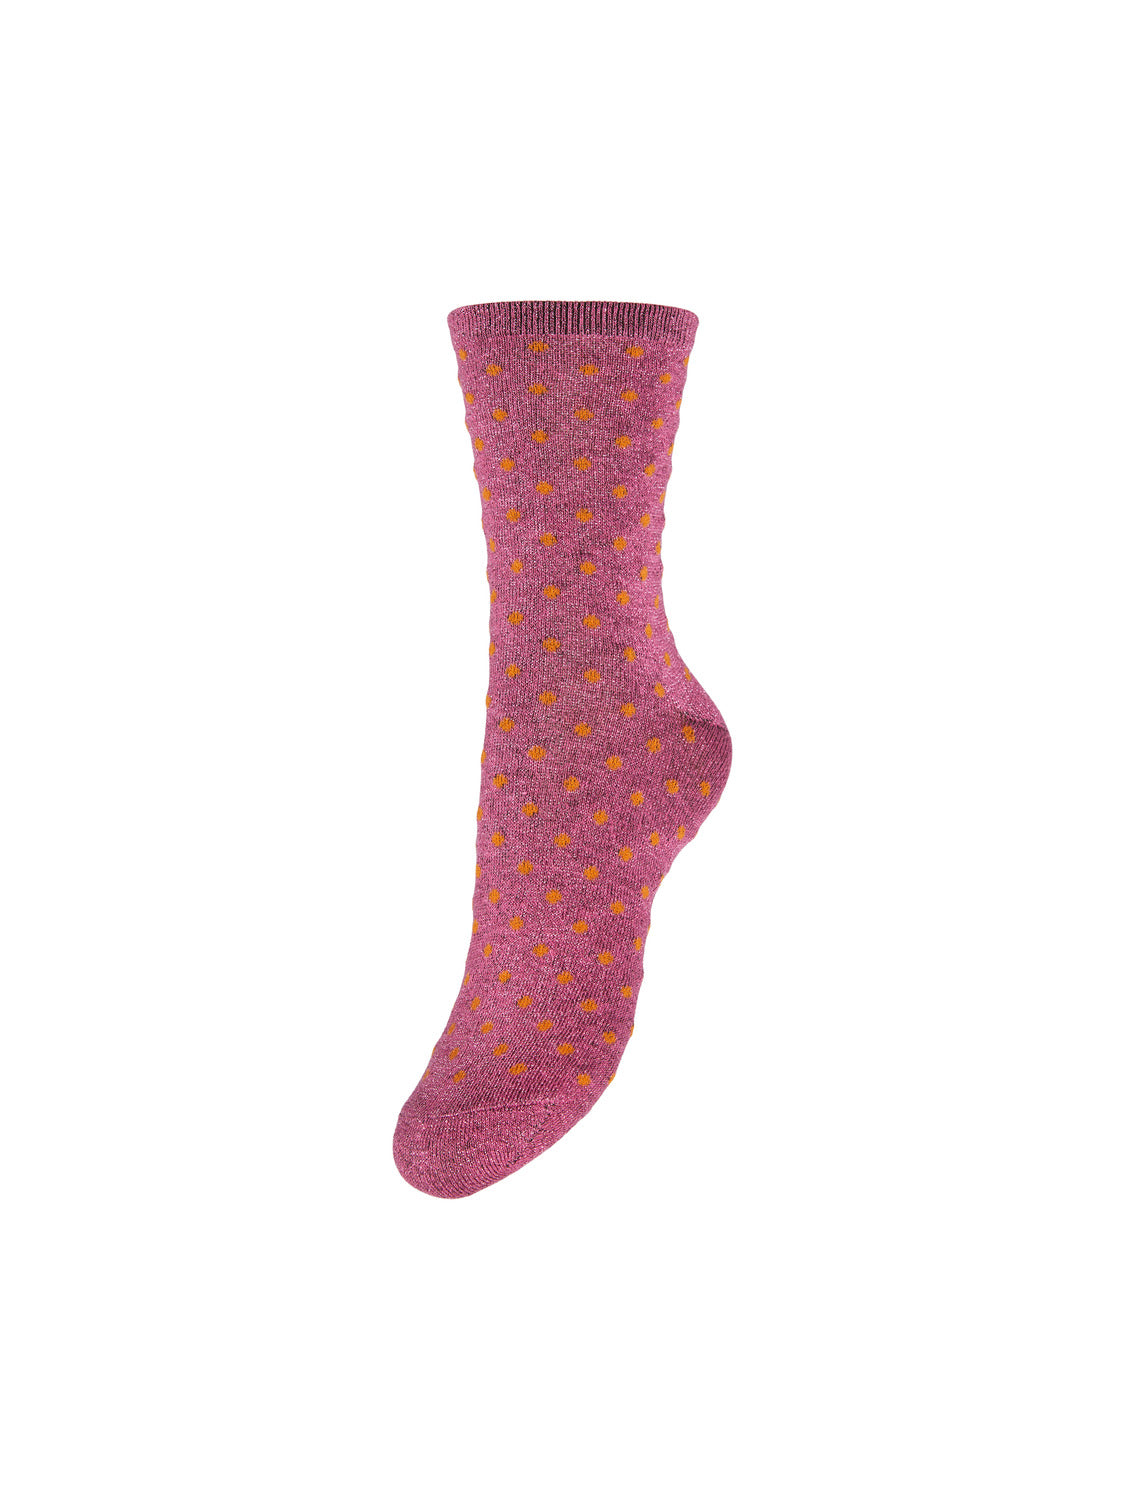 PCSEBBY Socks - Shocking Pink